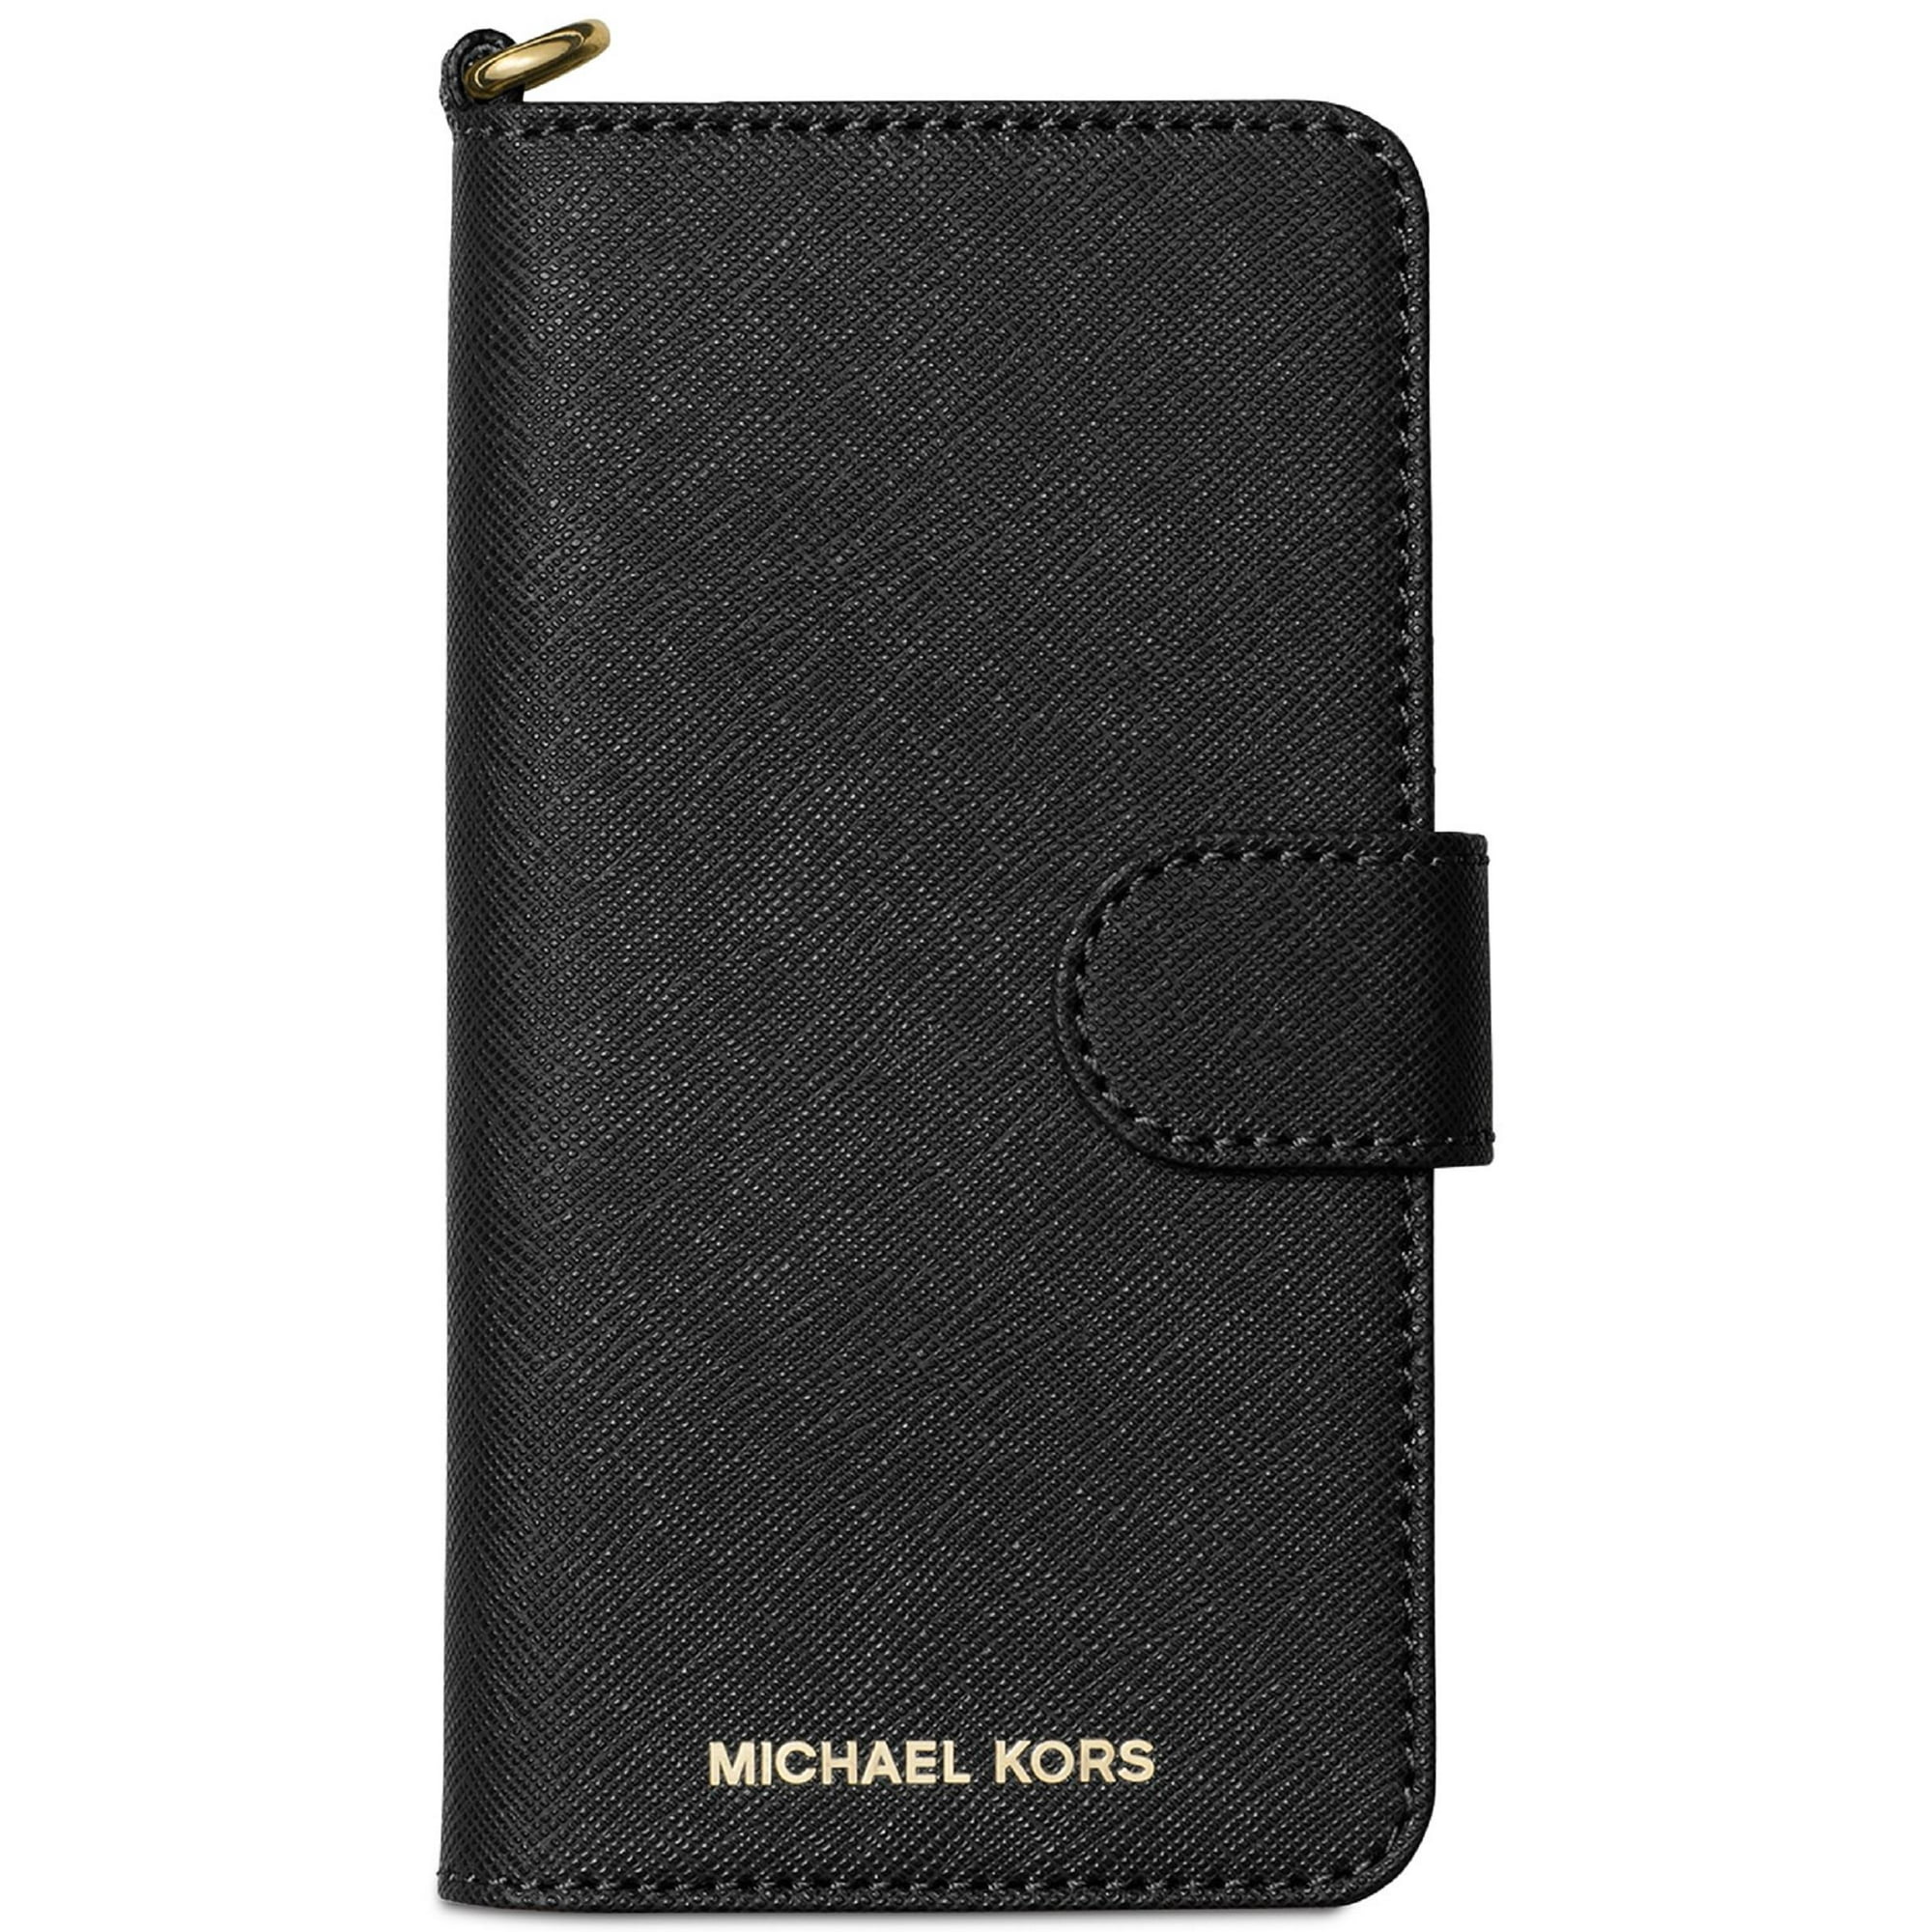 Michael Kors Saffiano Leather Folio Phone Case for iPhone X - Black